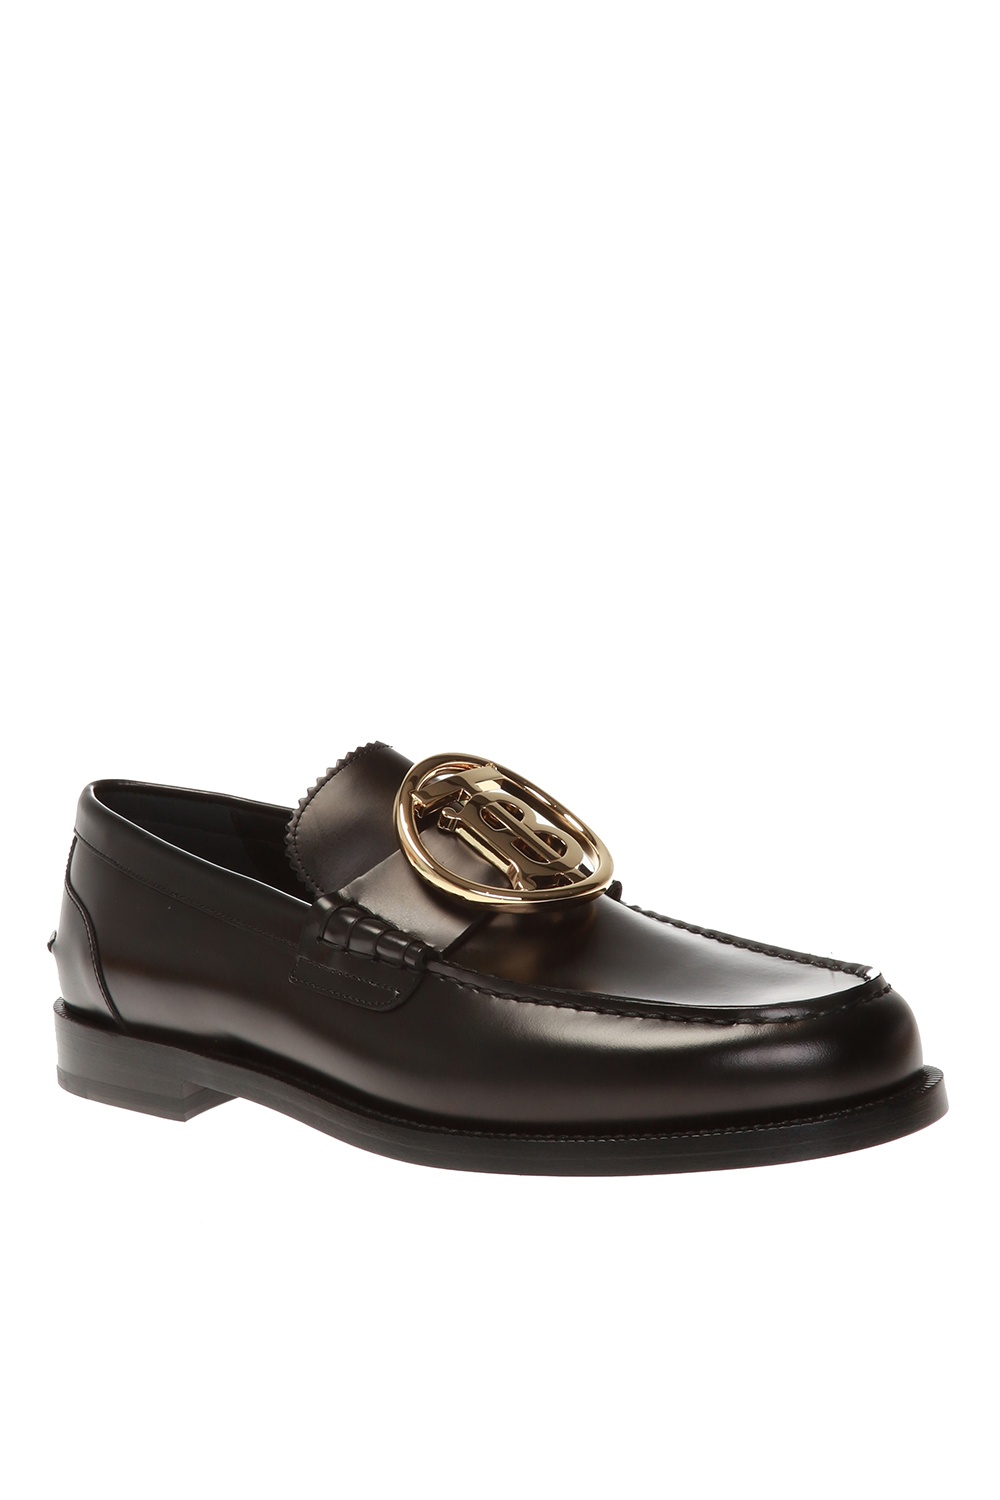 Burberry Logo loafers | Men's Shoes | Vitkac